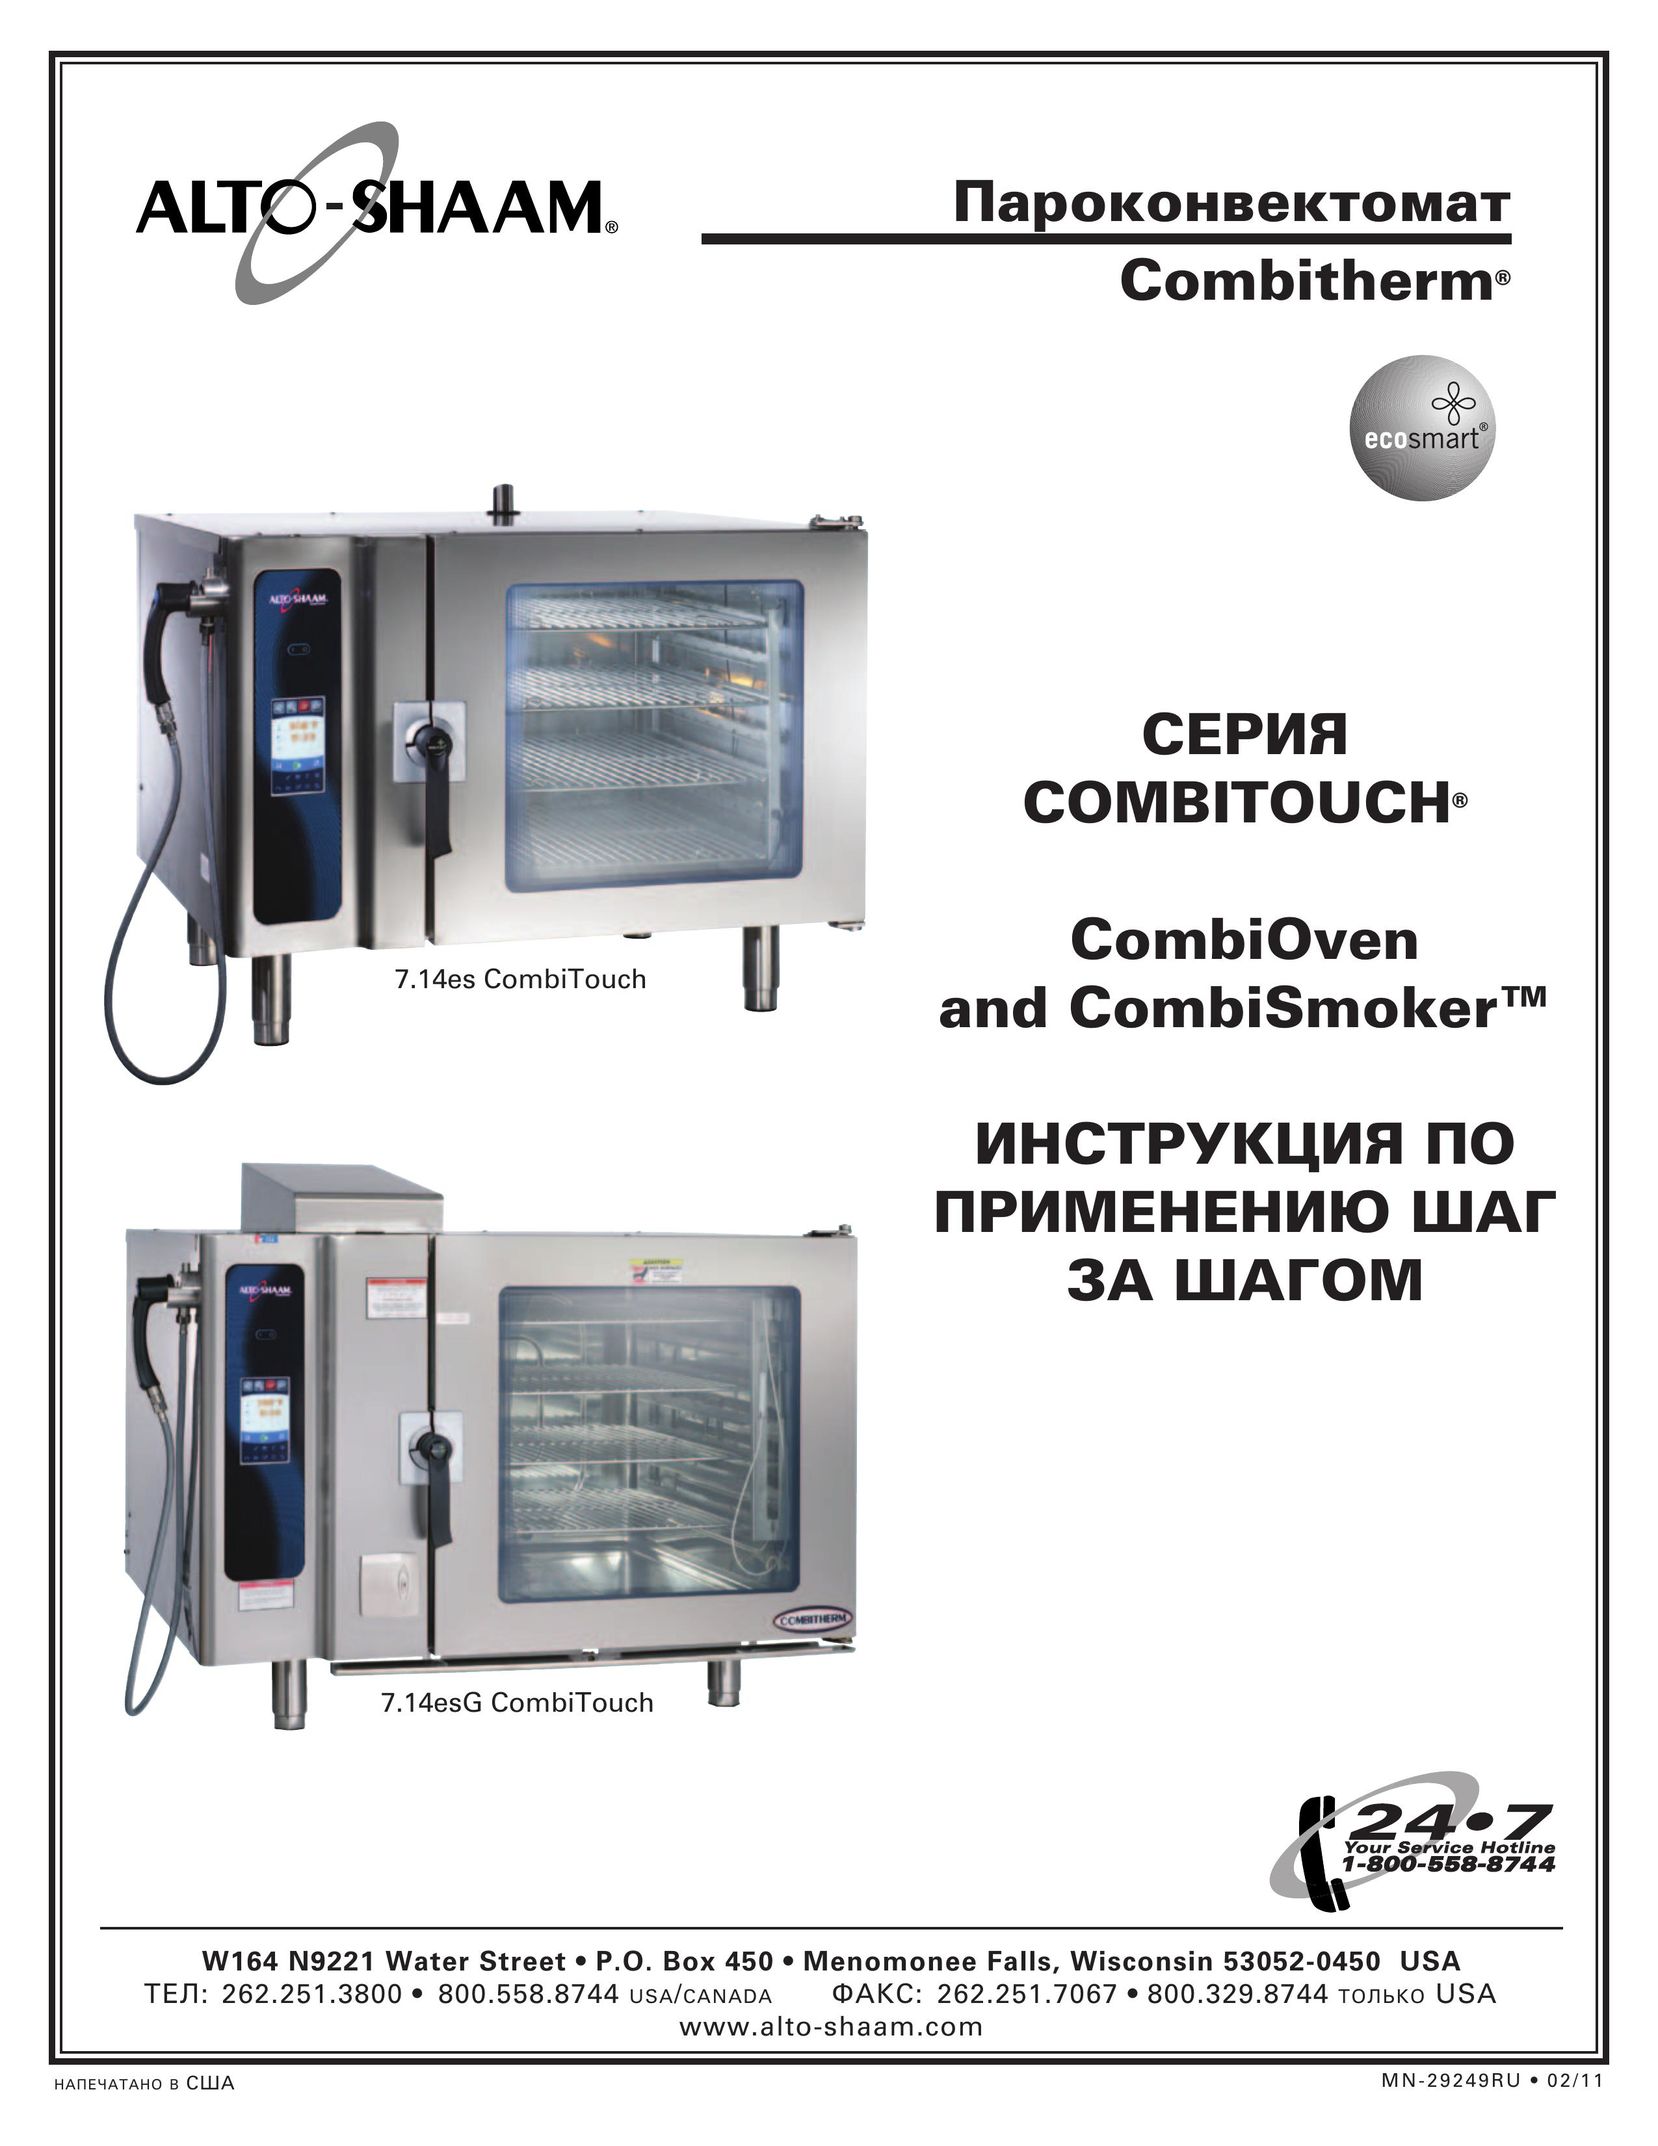 Alto-Shaam MN-29249RU Microwave Oven User Manual